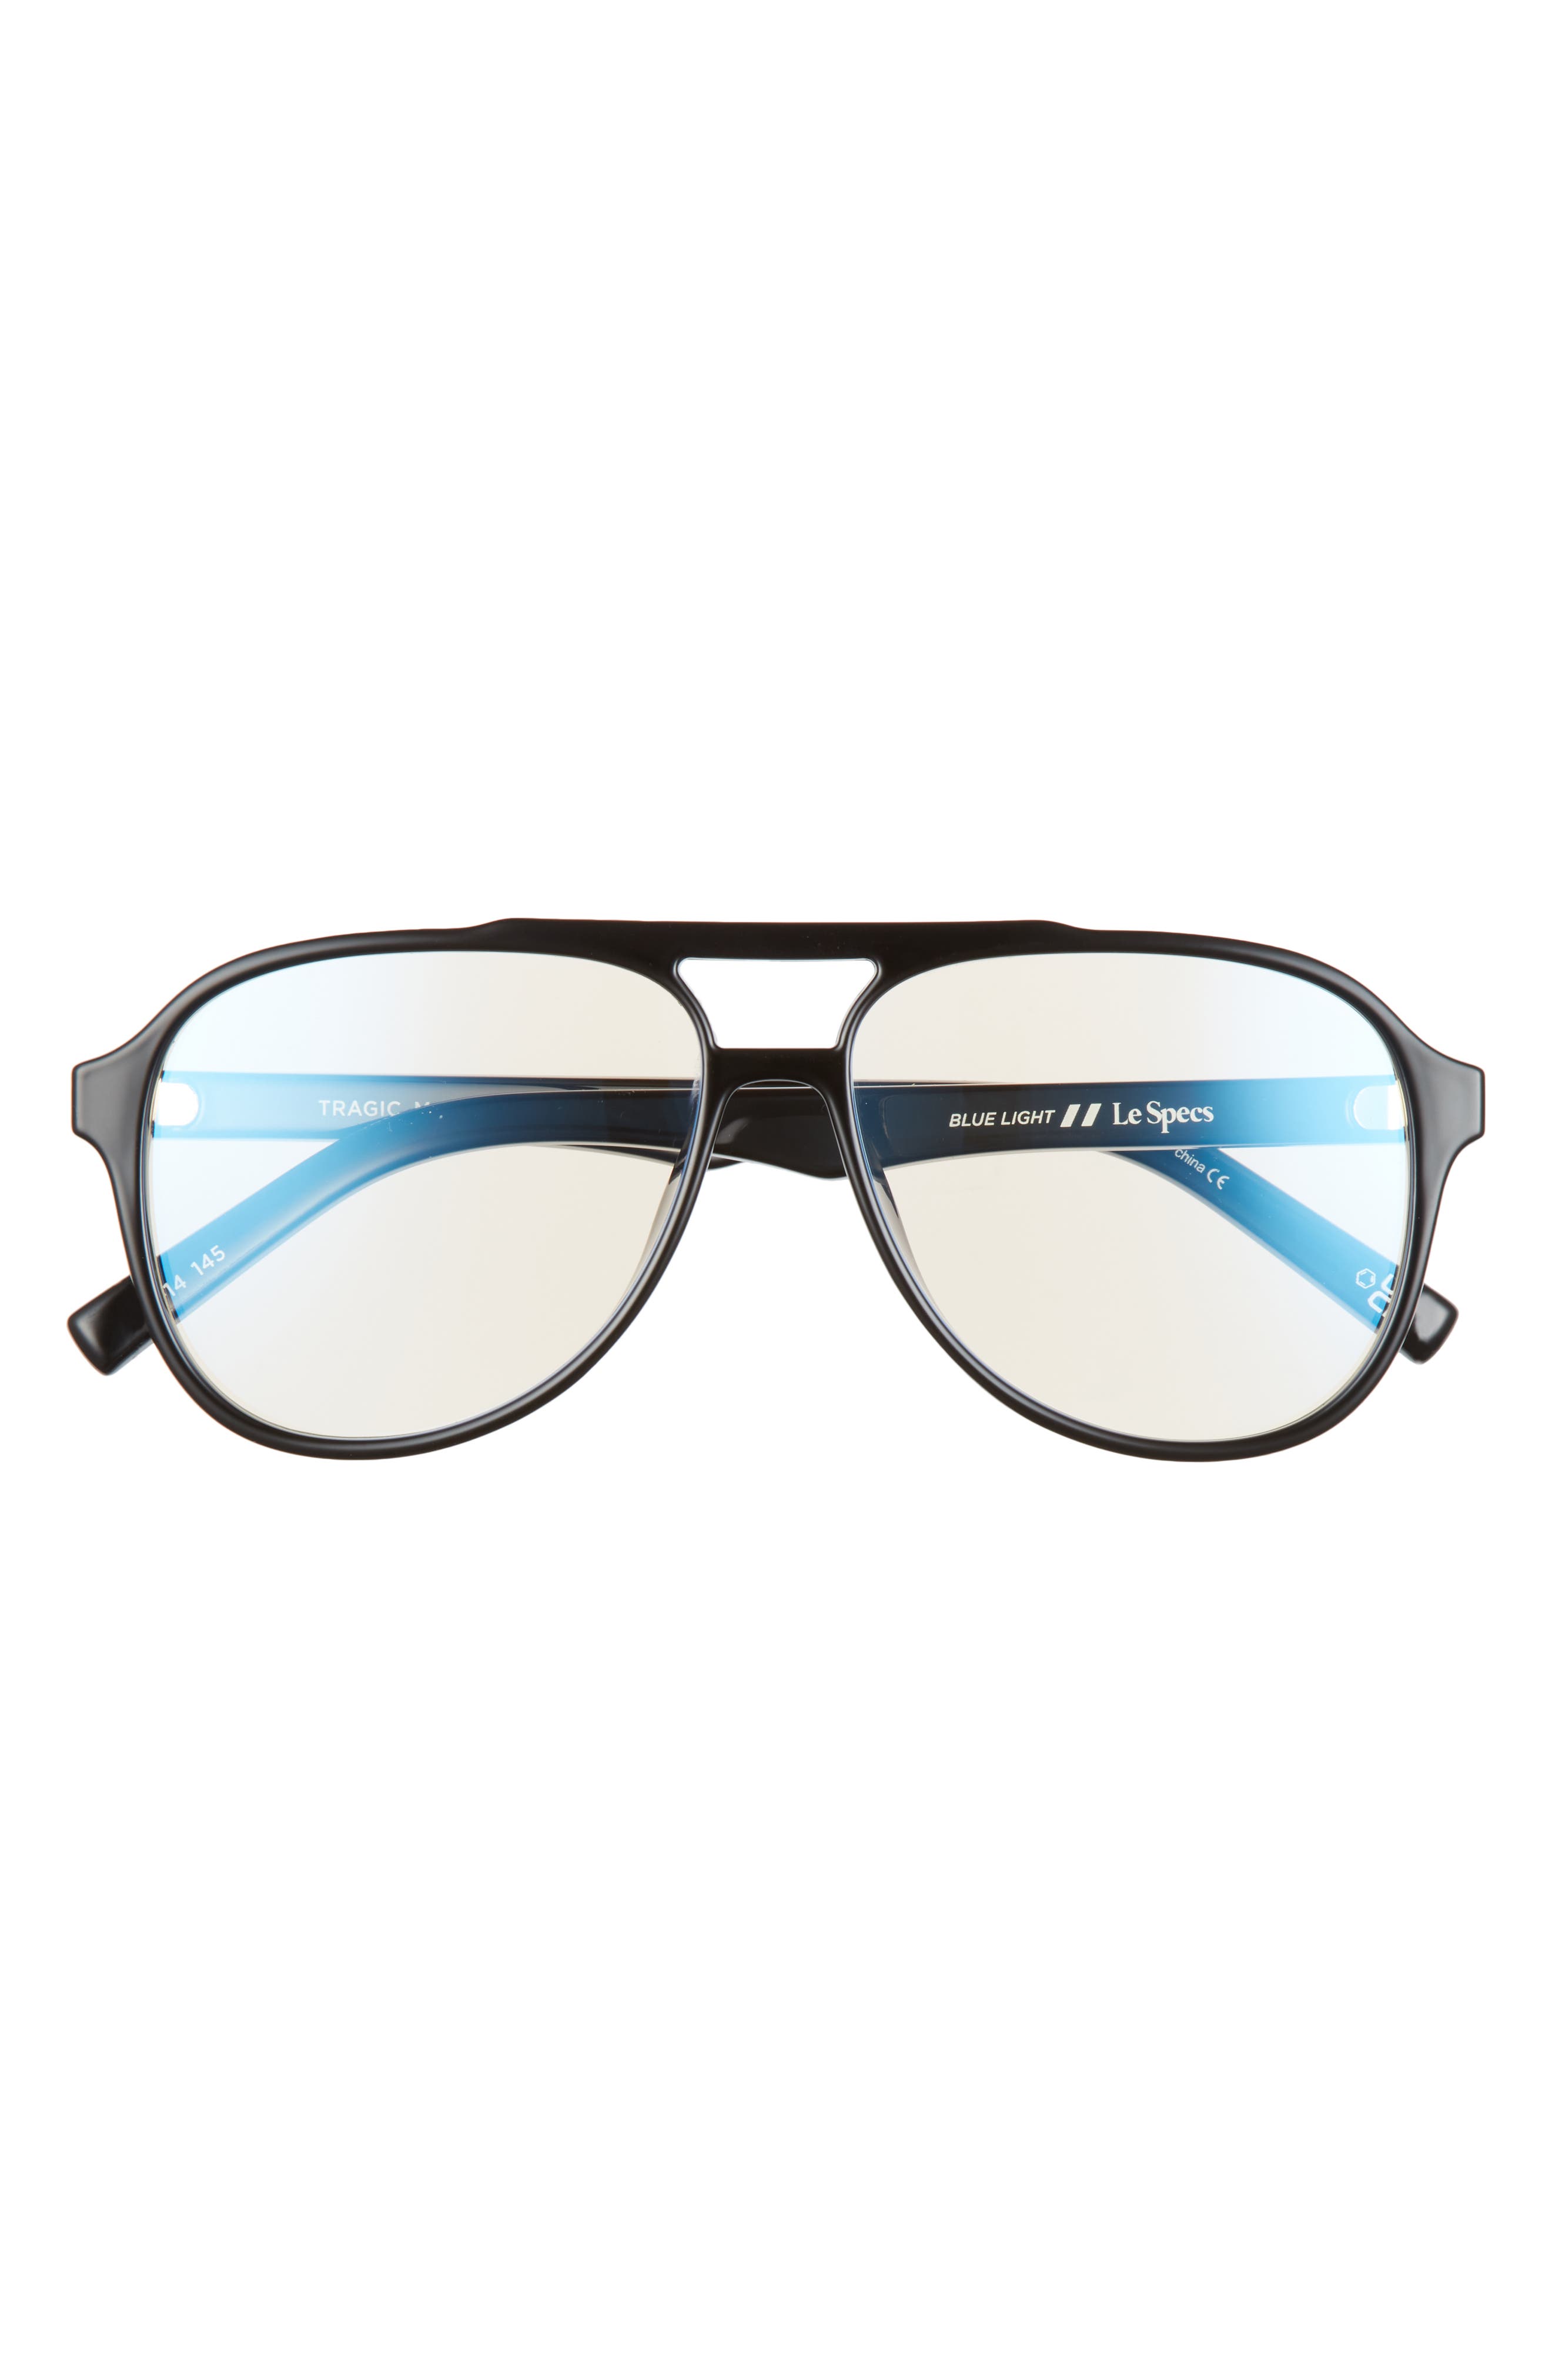 Le Specs Tragic Magic 52mm Round Blue Light Blocking Glasses in Black/Anti Blue Light at Nordstrom